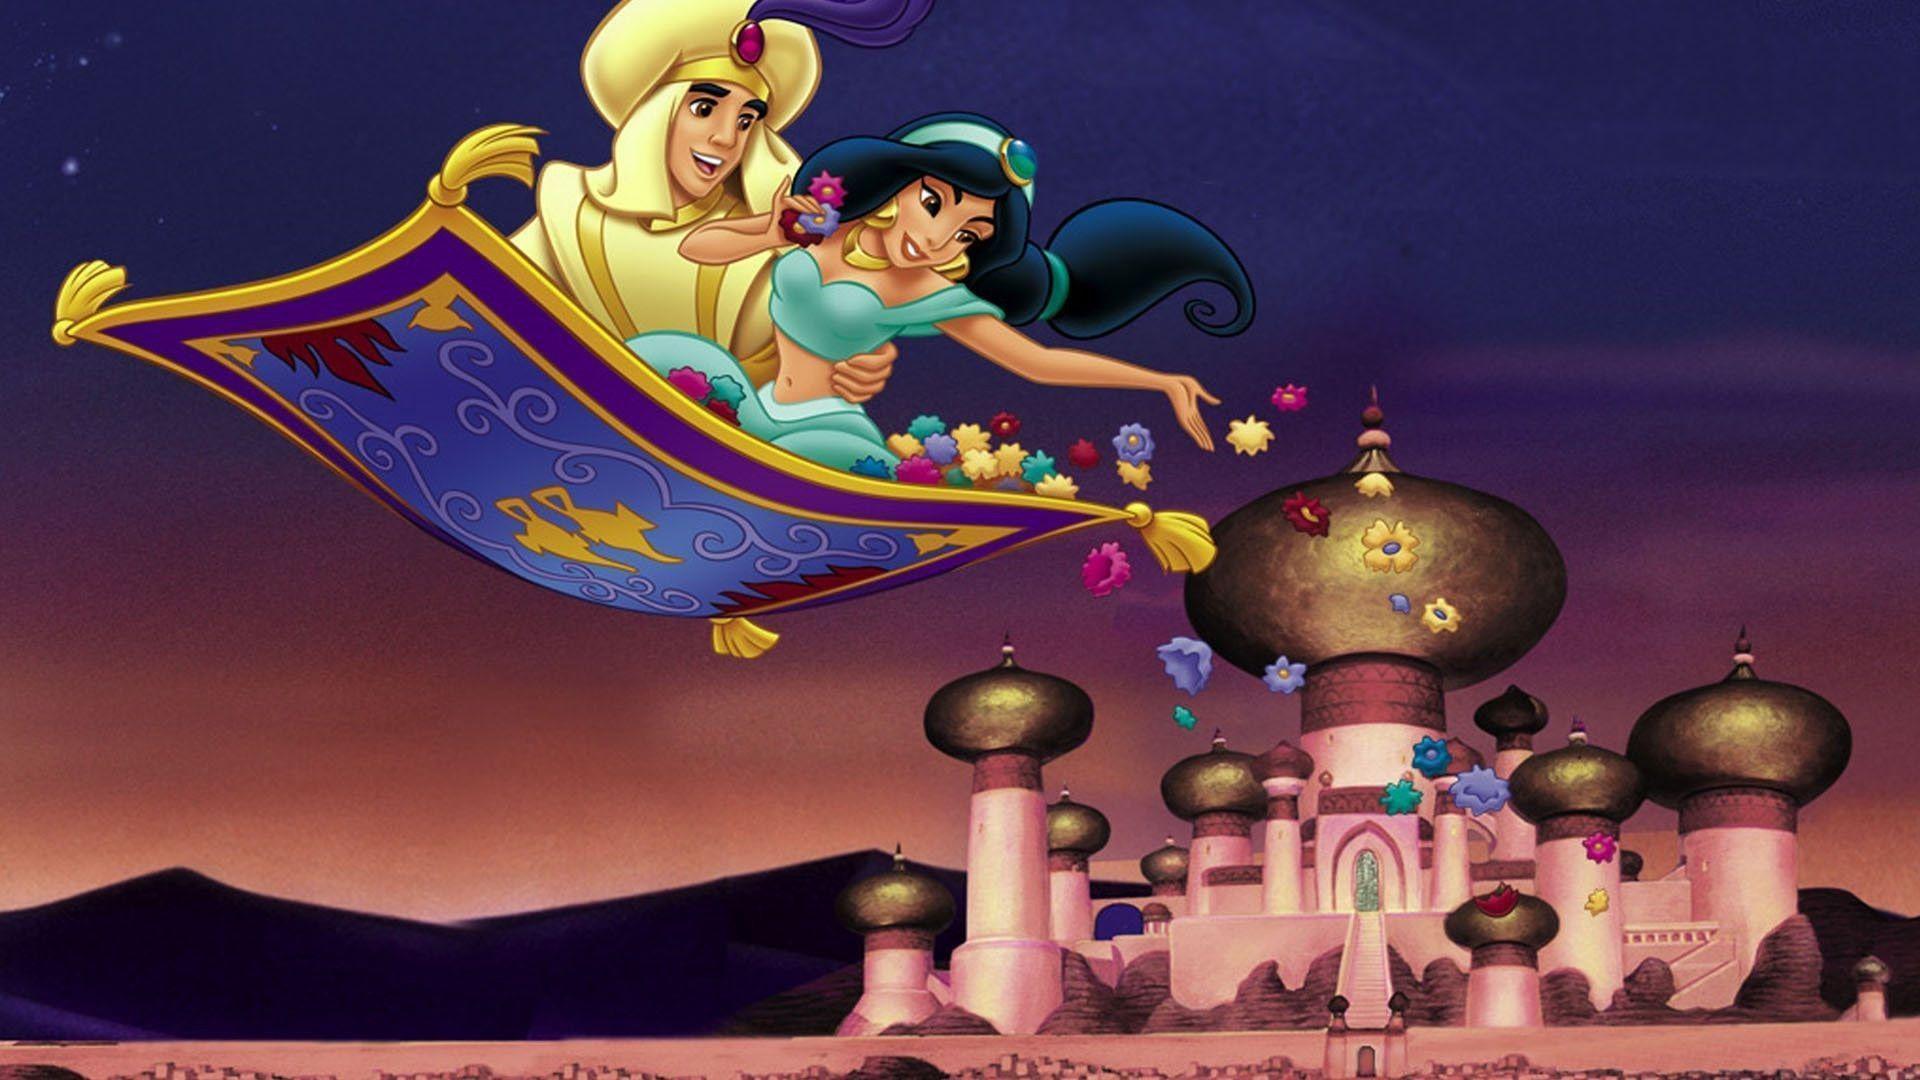 Aladdin HD Wallpaper for desktop download